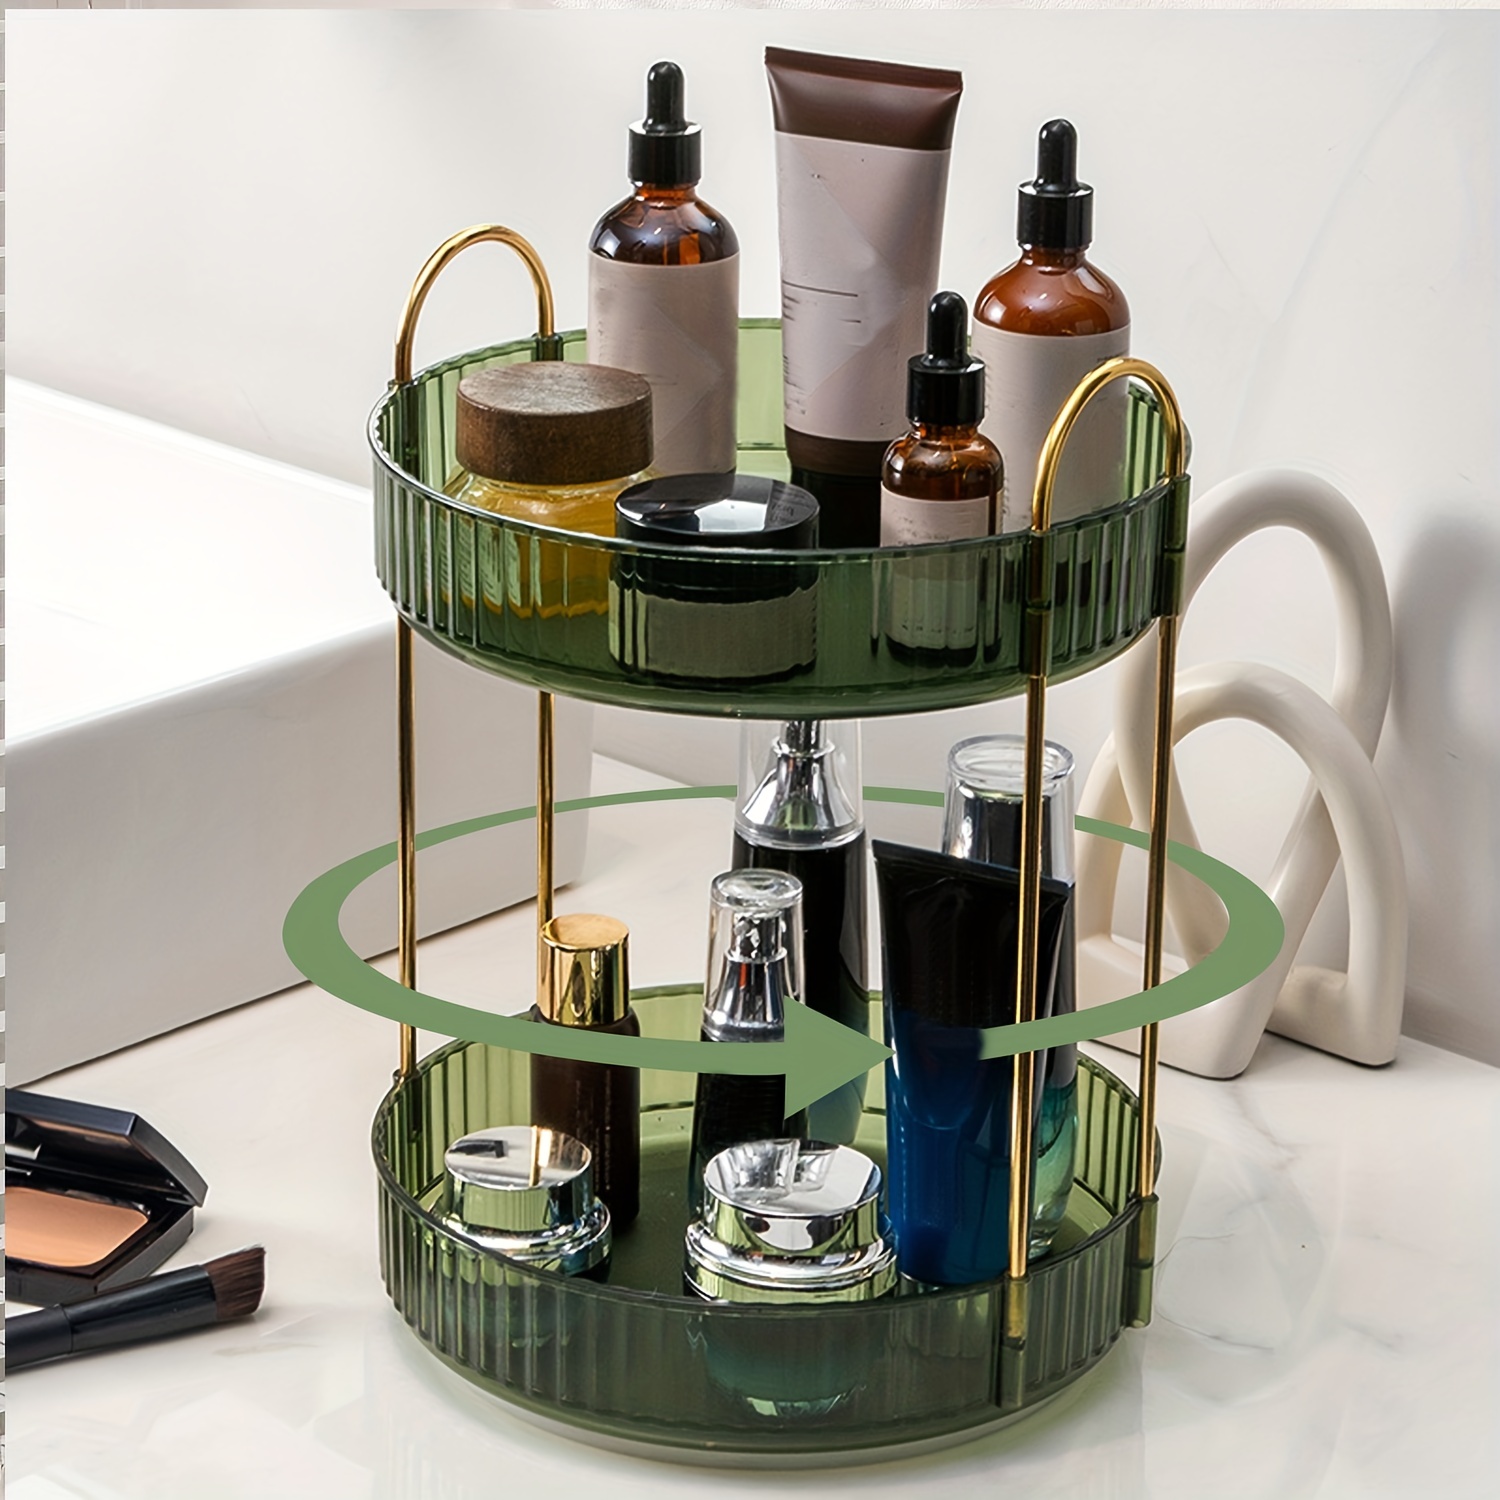 

360° Rotating Shelving Makeup Organizer - Diy Adjustable Carousel Spinning Holder Rack - Large Capacity Cosmetic Storage Box